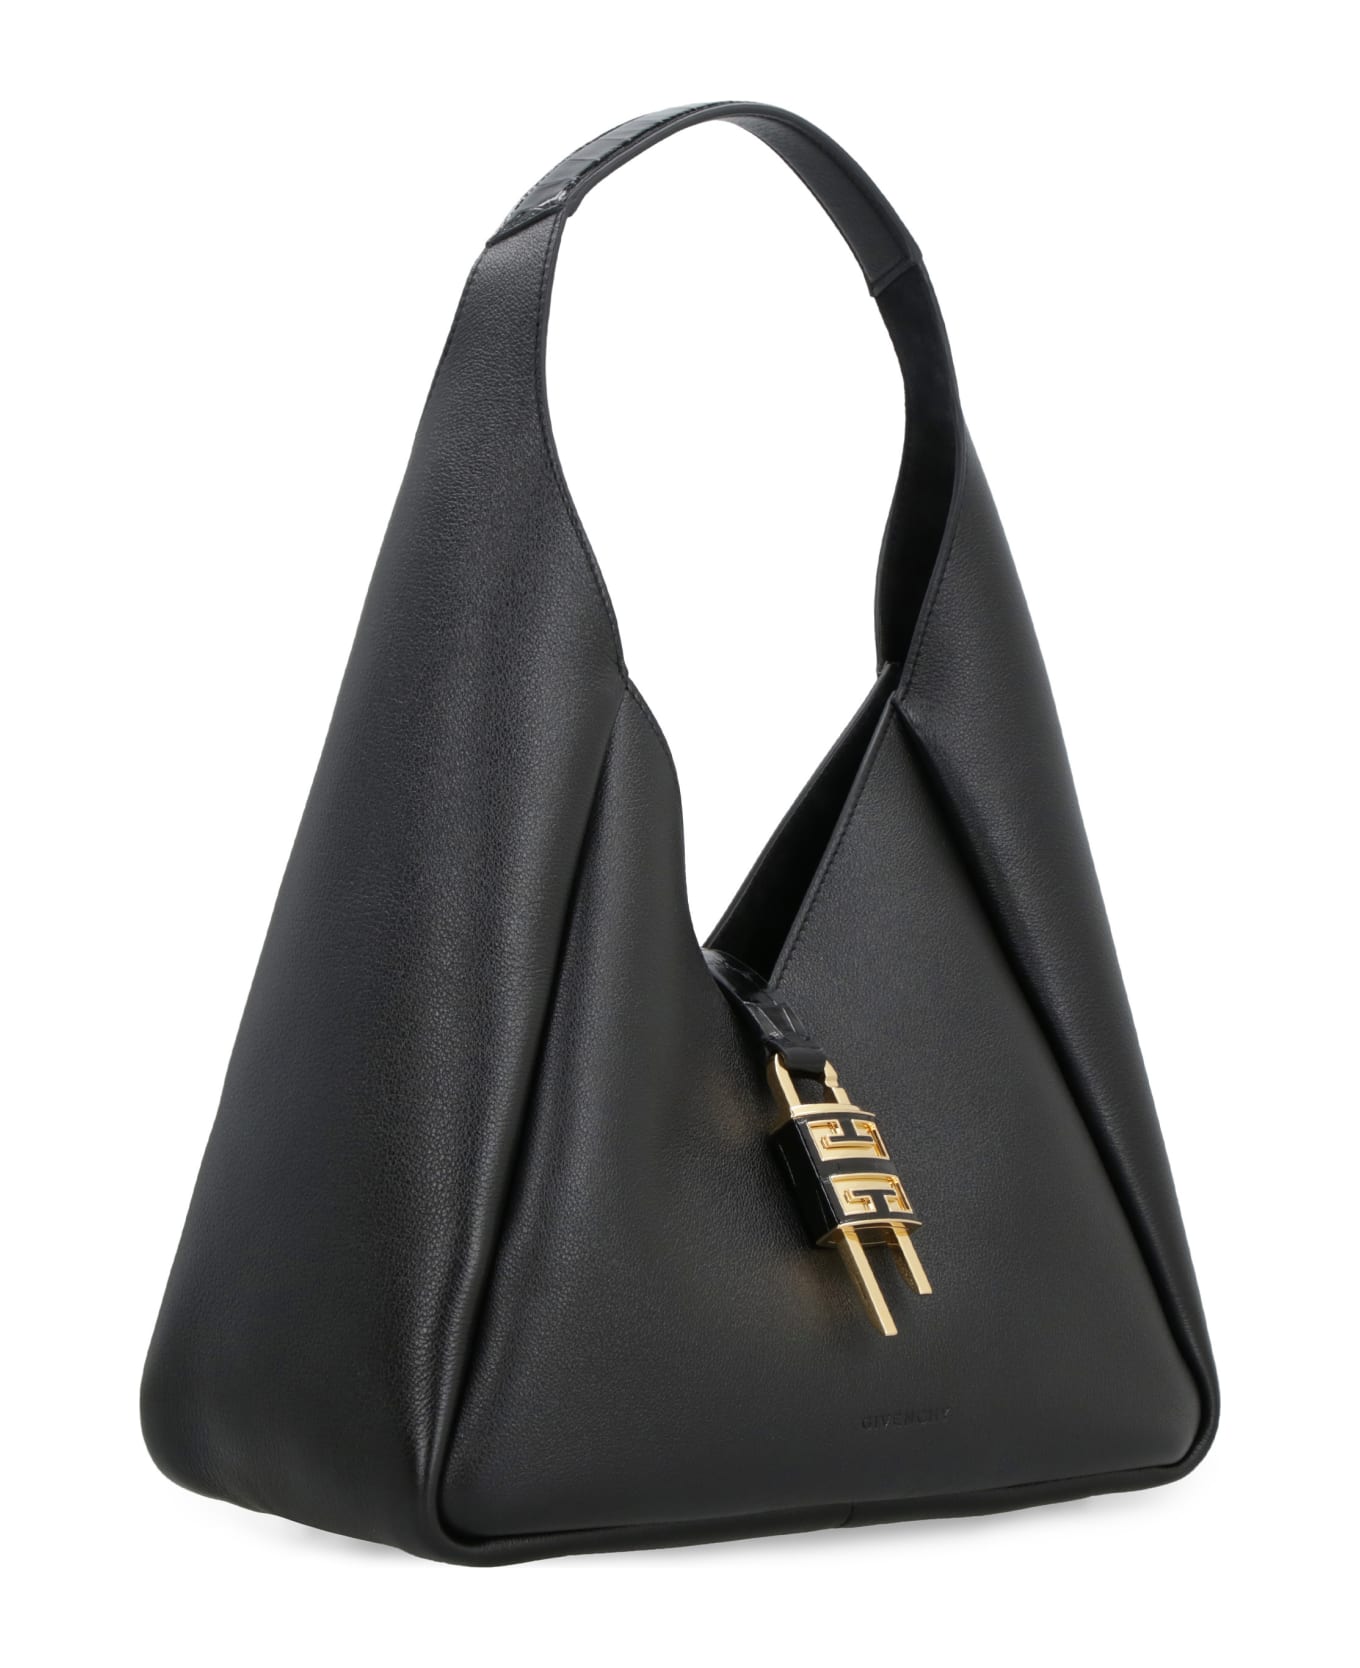 Givenchy G-hobo Leather Bag - black